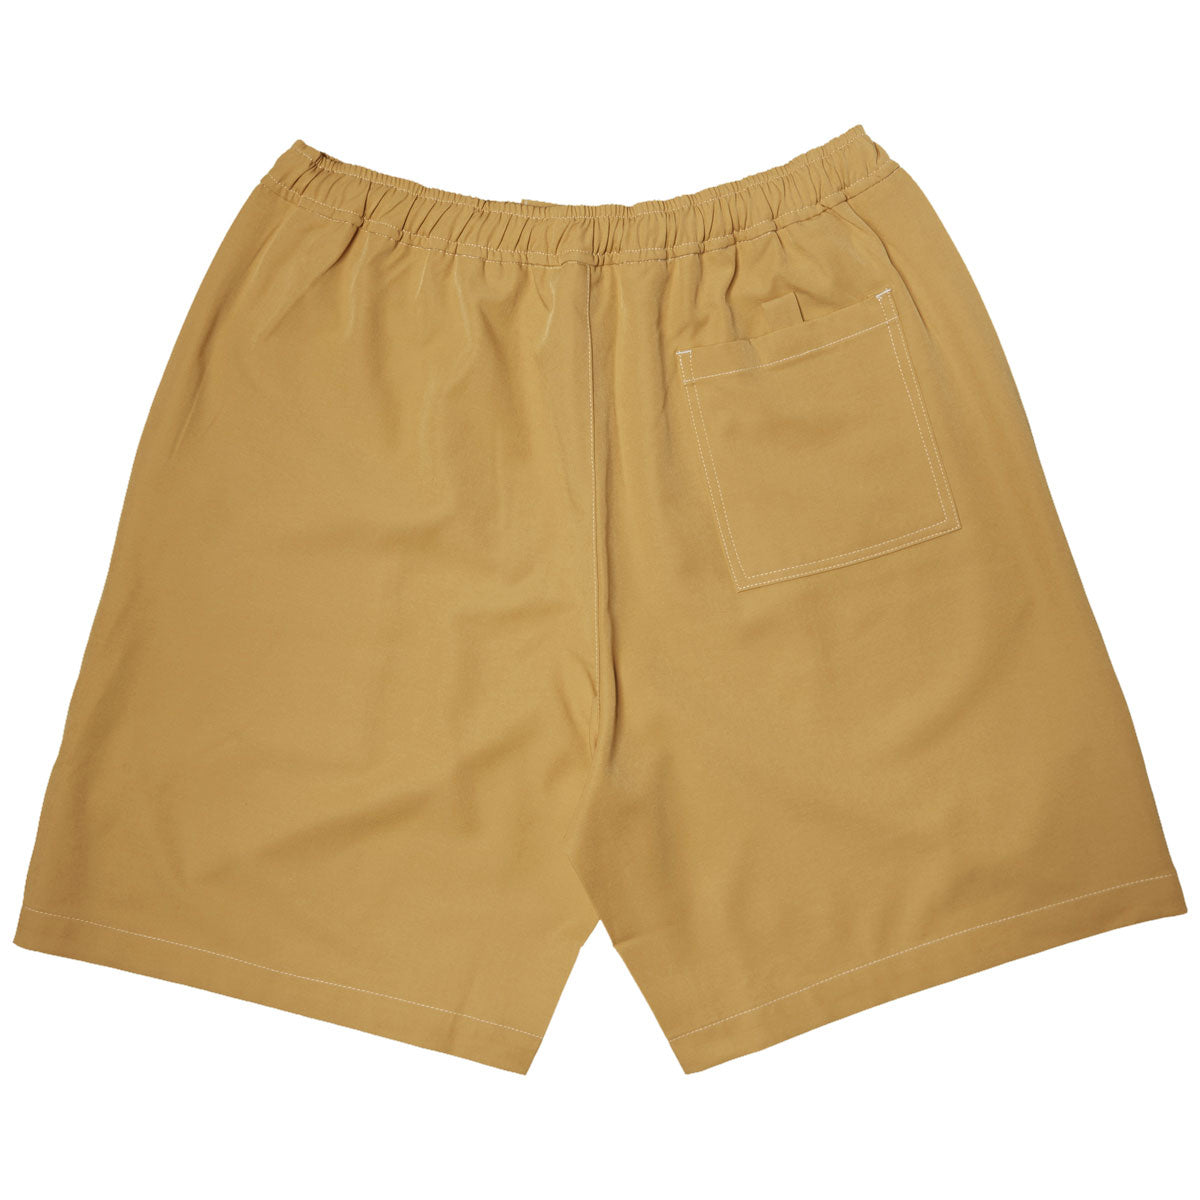 WKND Sport Shorts - Yellow image 2